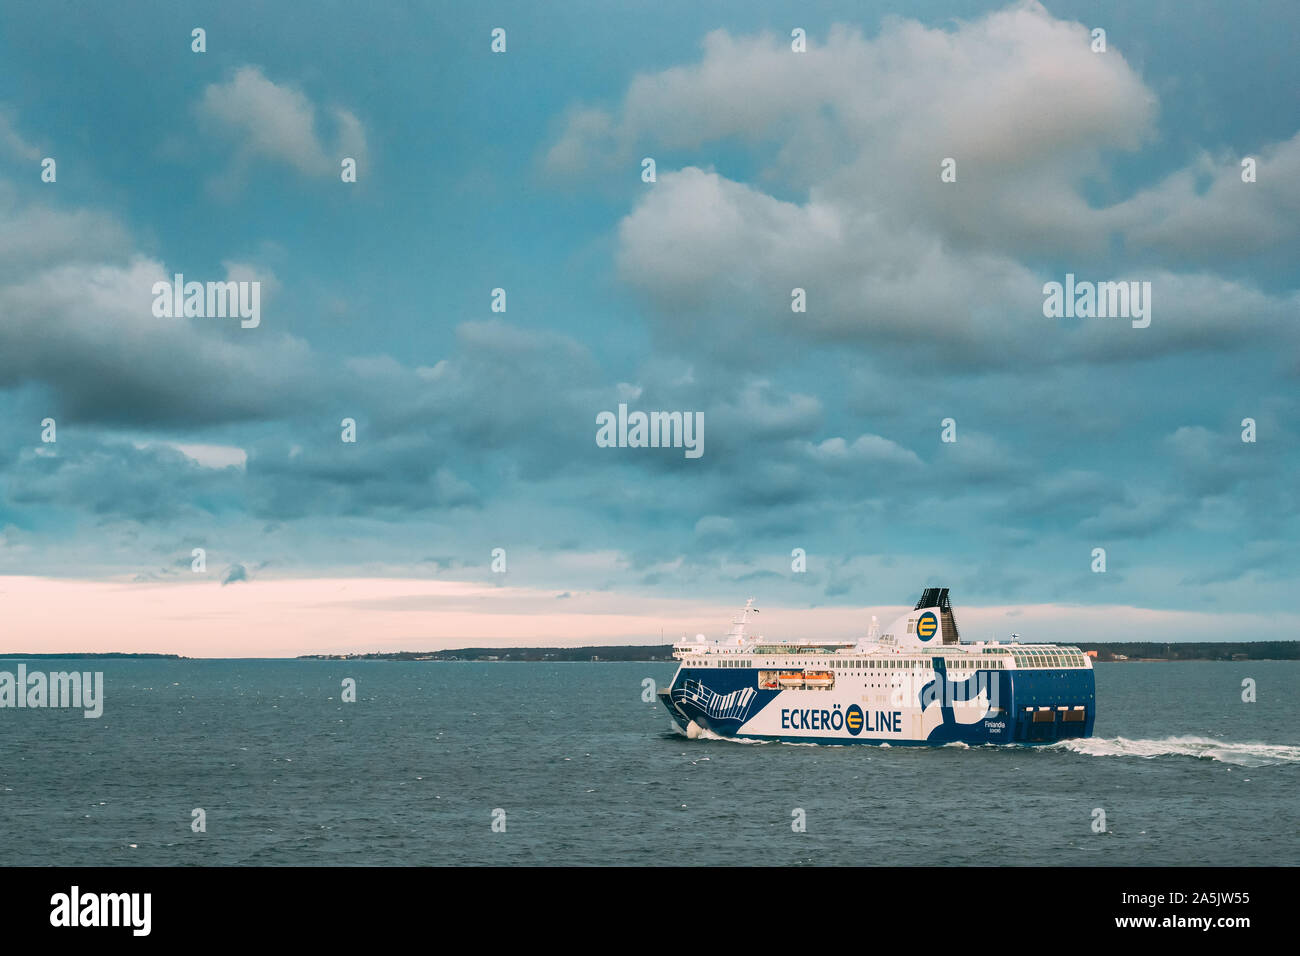 Helsinki, Finlandia - 11 de diciembre de 2016: Vista del moderno Ferry Ferry E Line Eckero flotando en el mar. Foto de stock